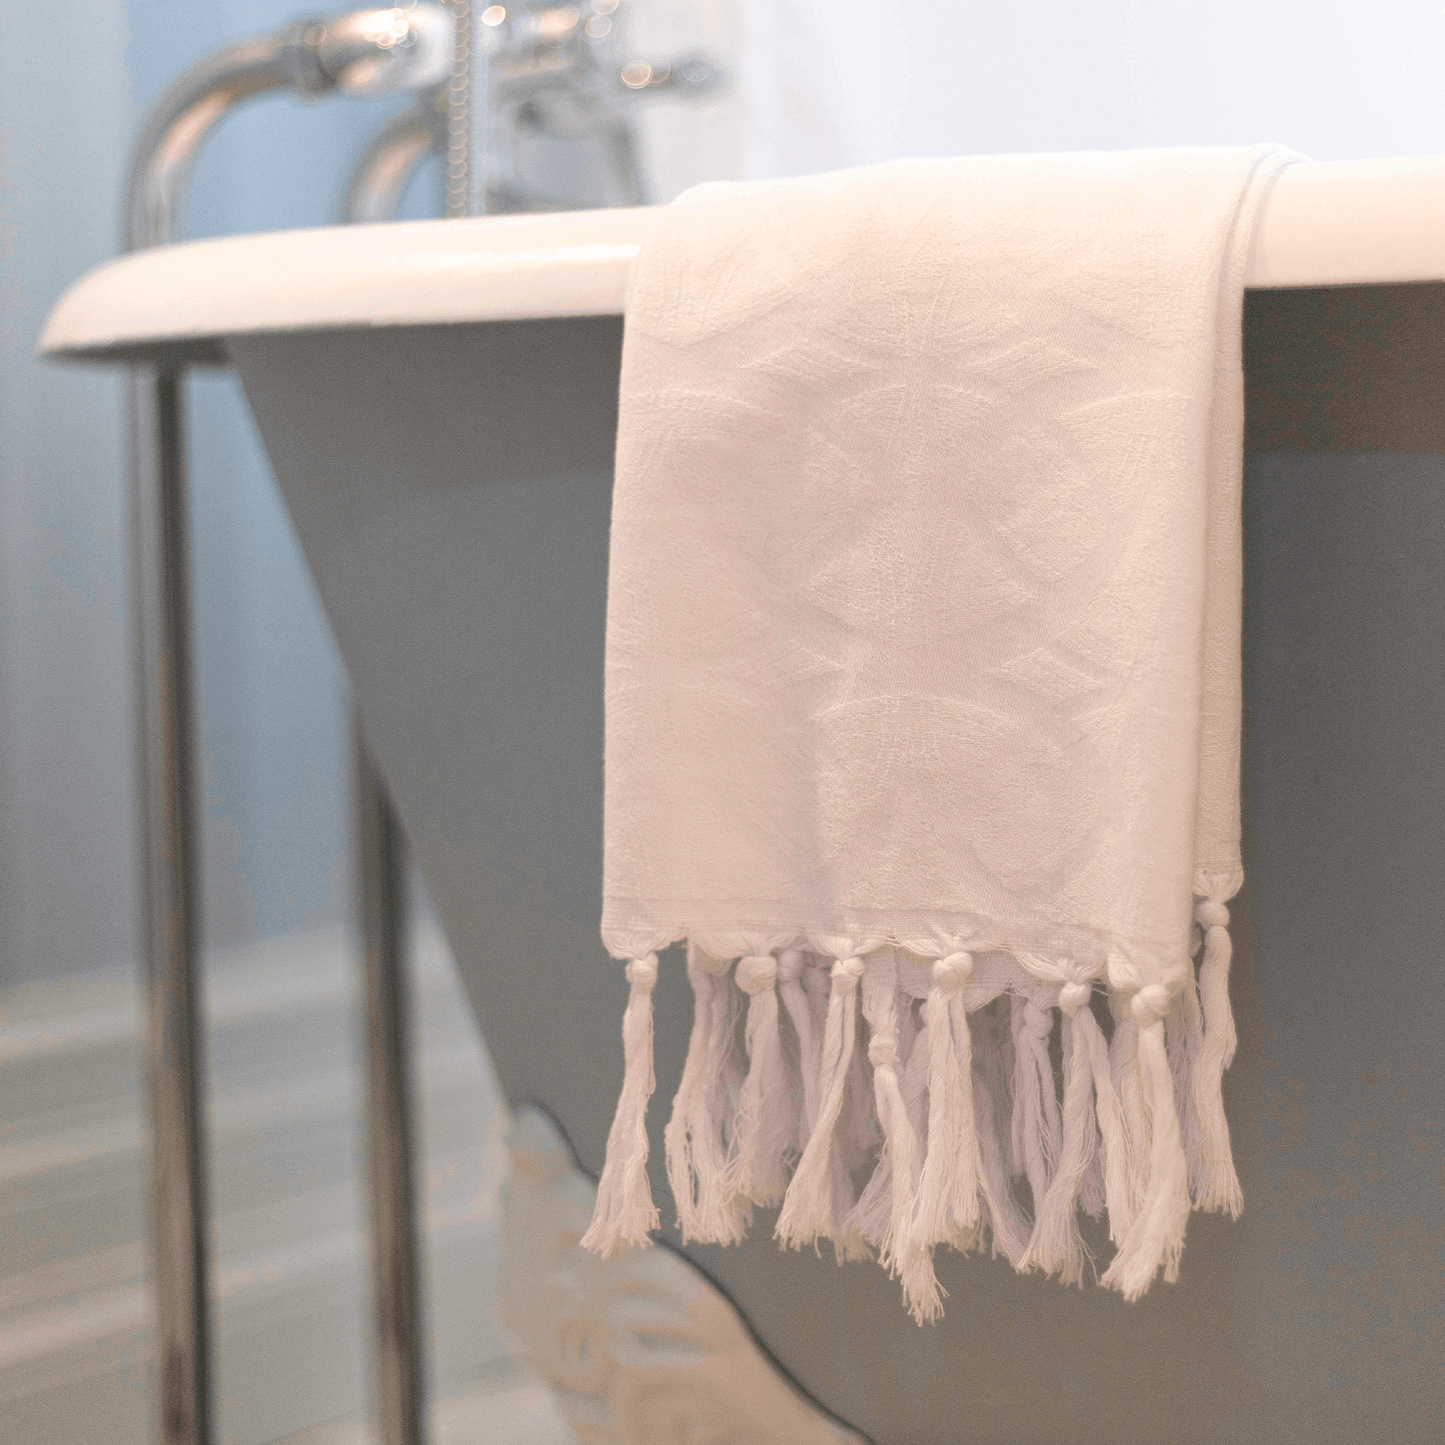  White Turkish towel hanging on bath tub